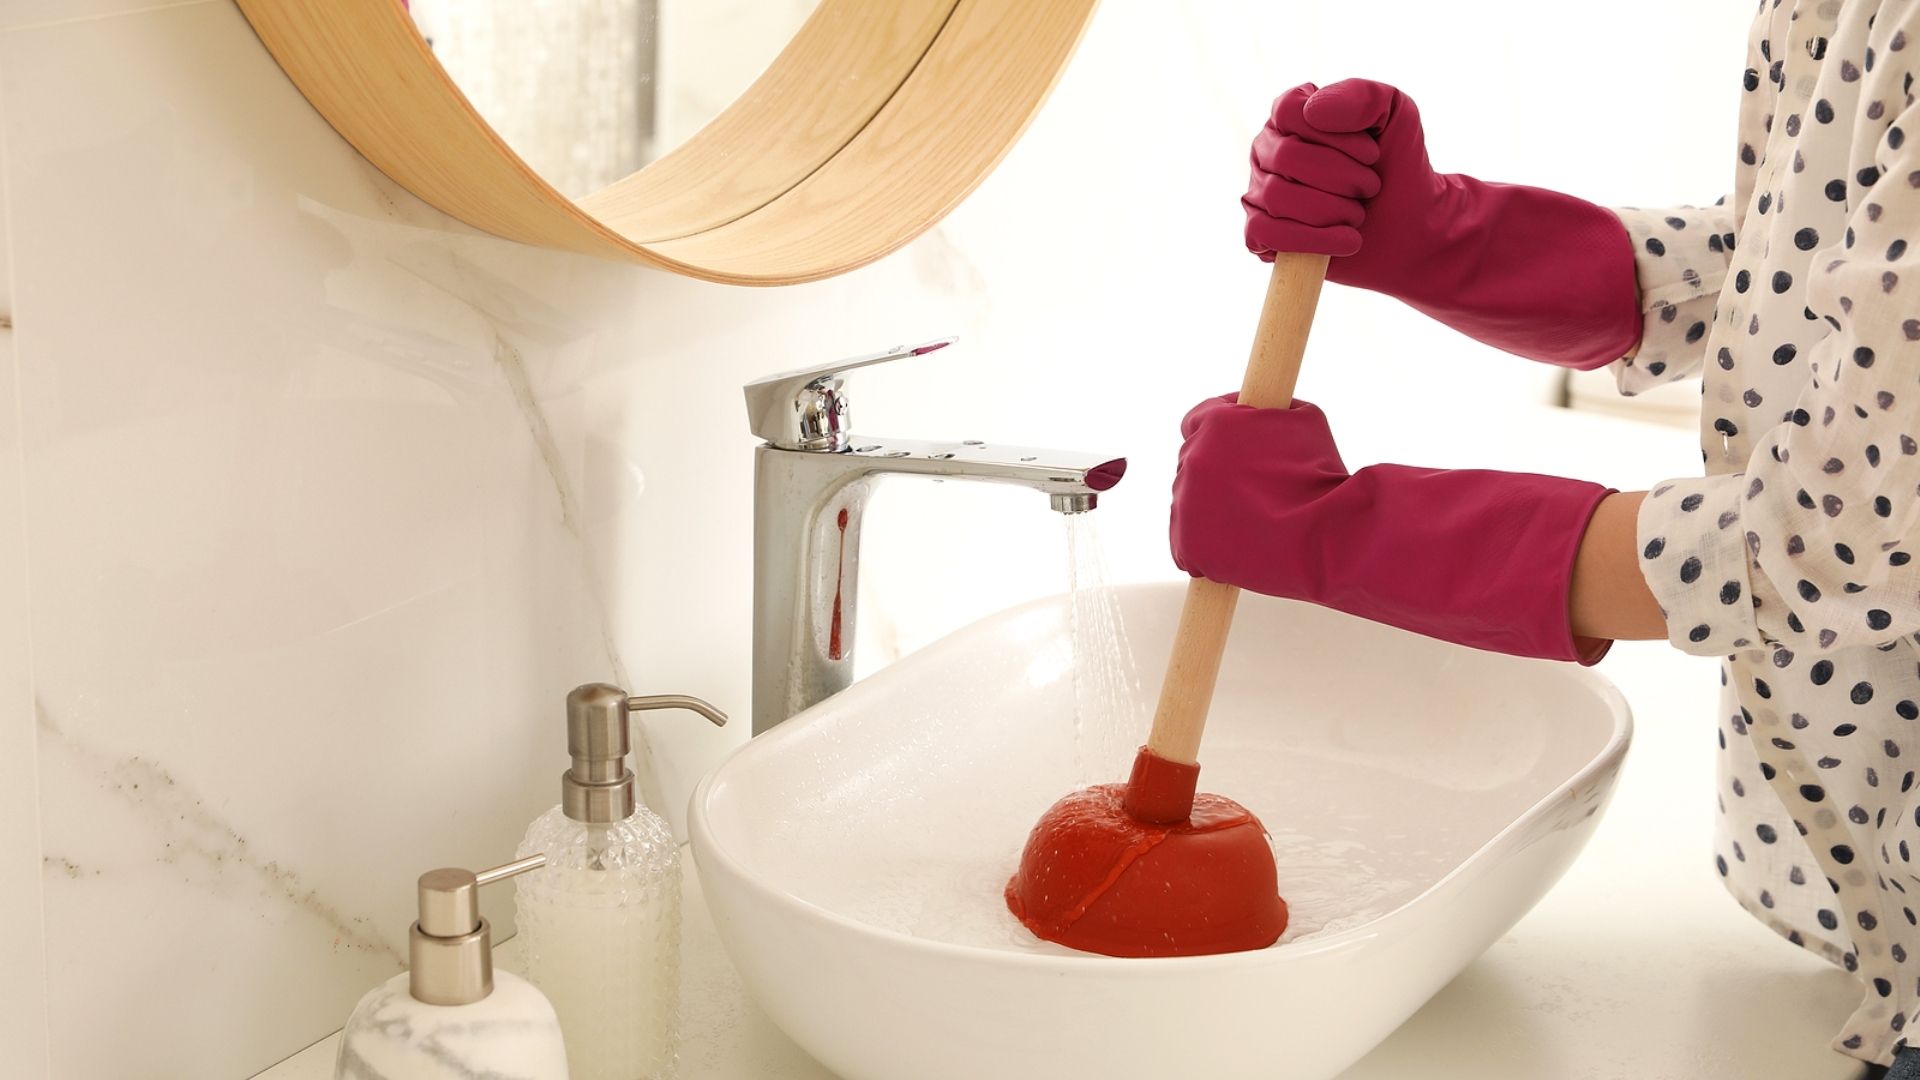 How to Clean a Smelly Tub or Sink Drain – ELA Home Repairs